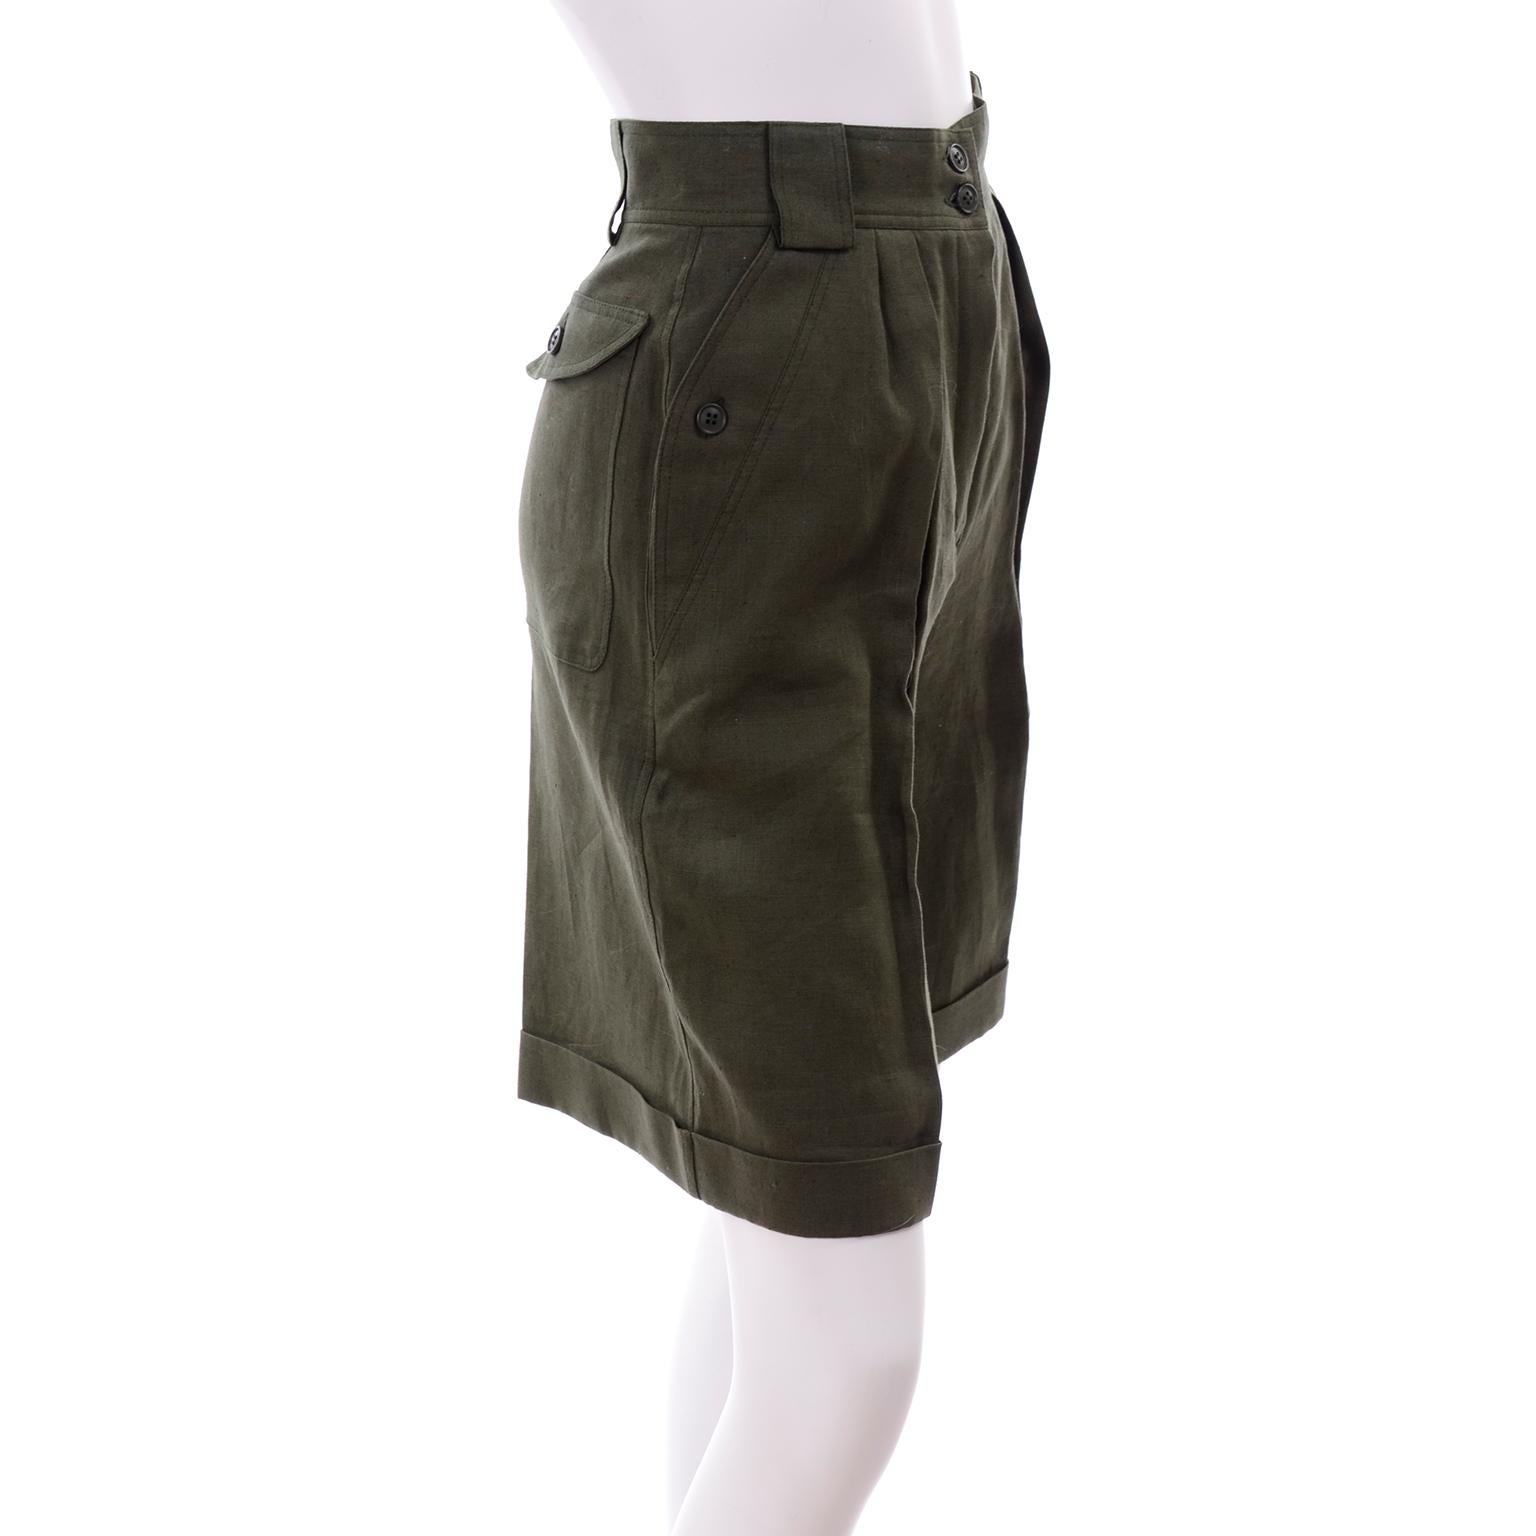 green high waisted shorts